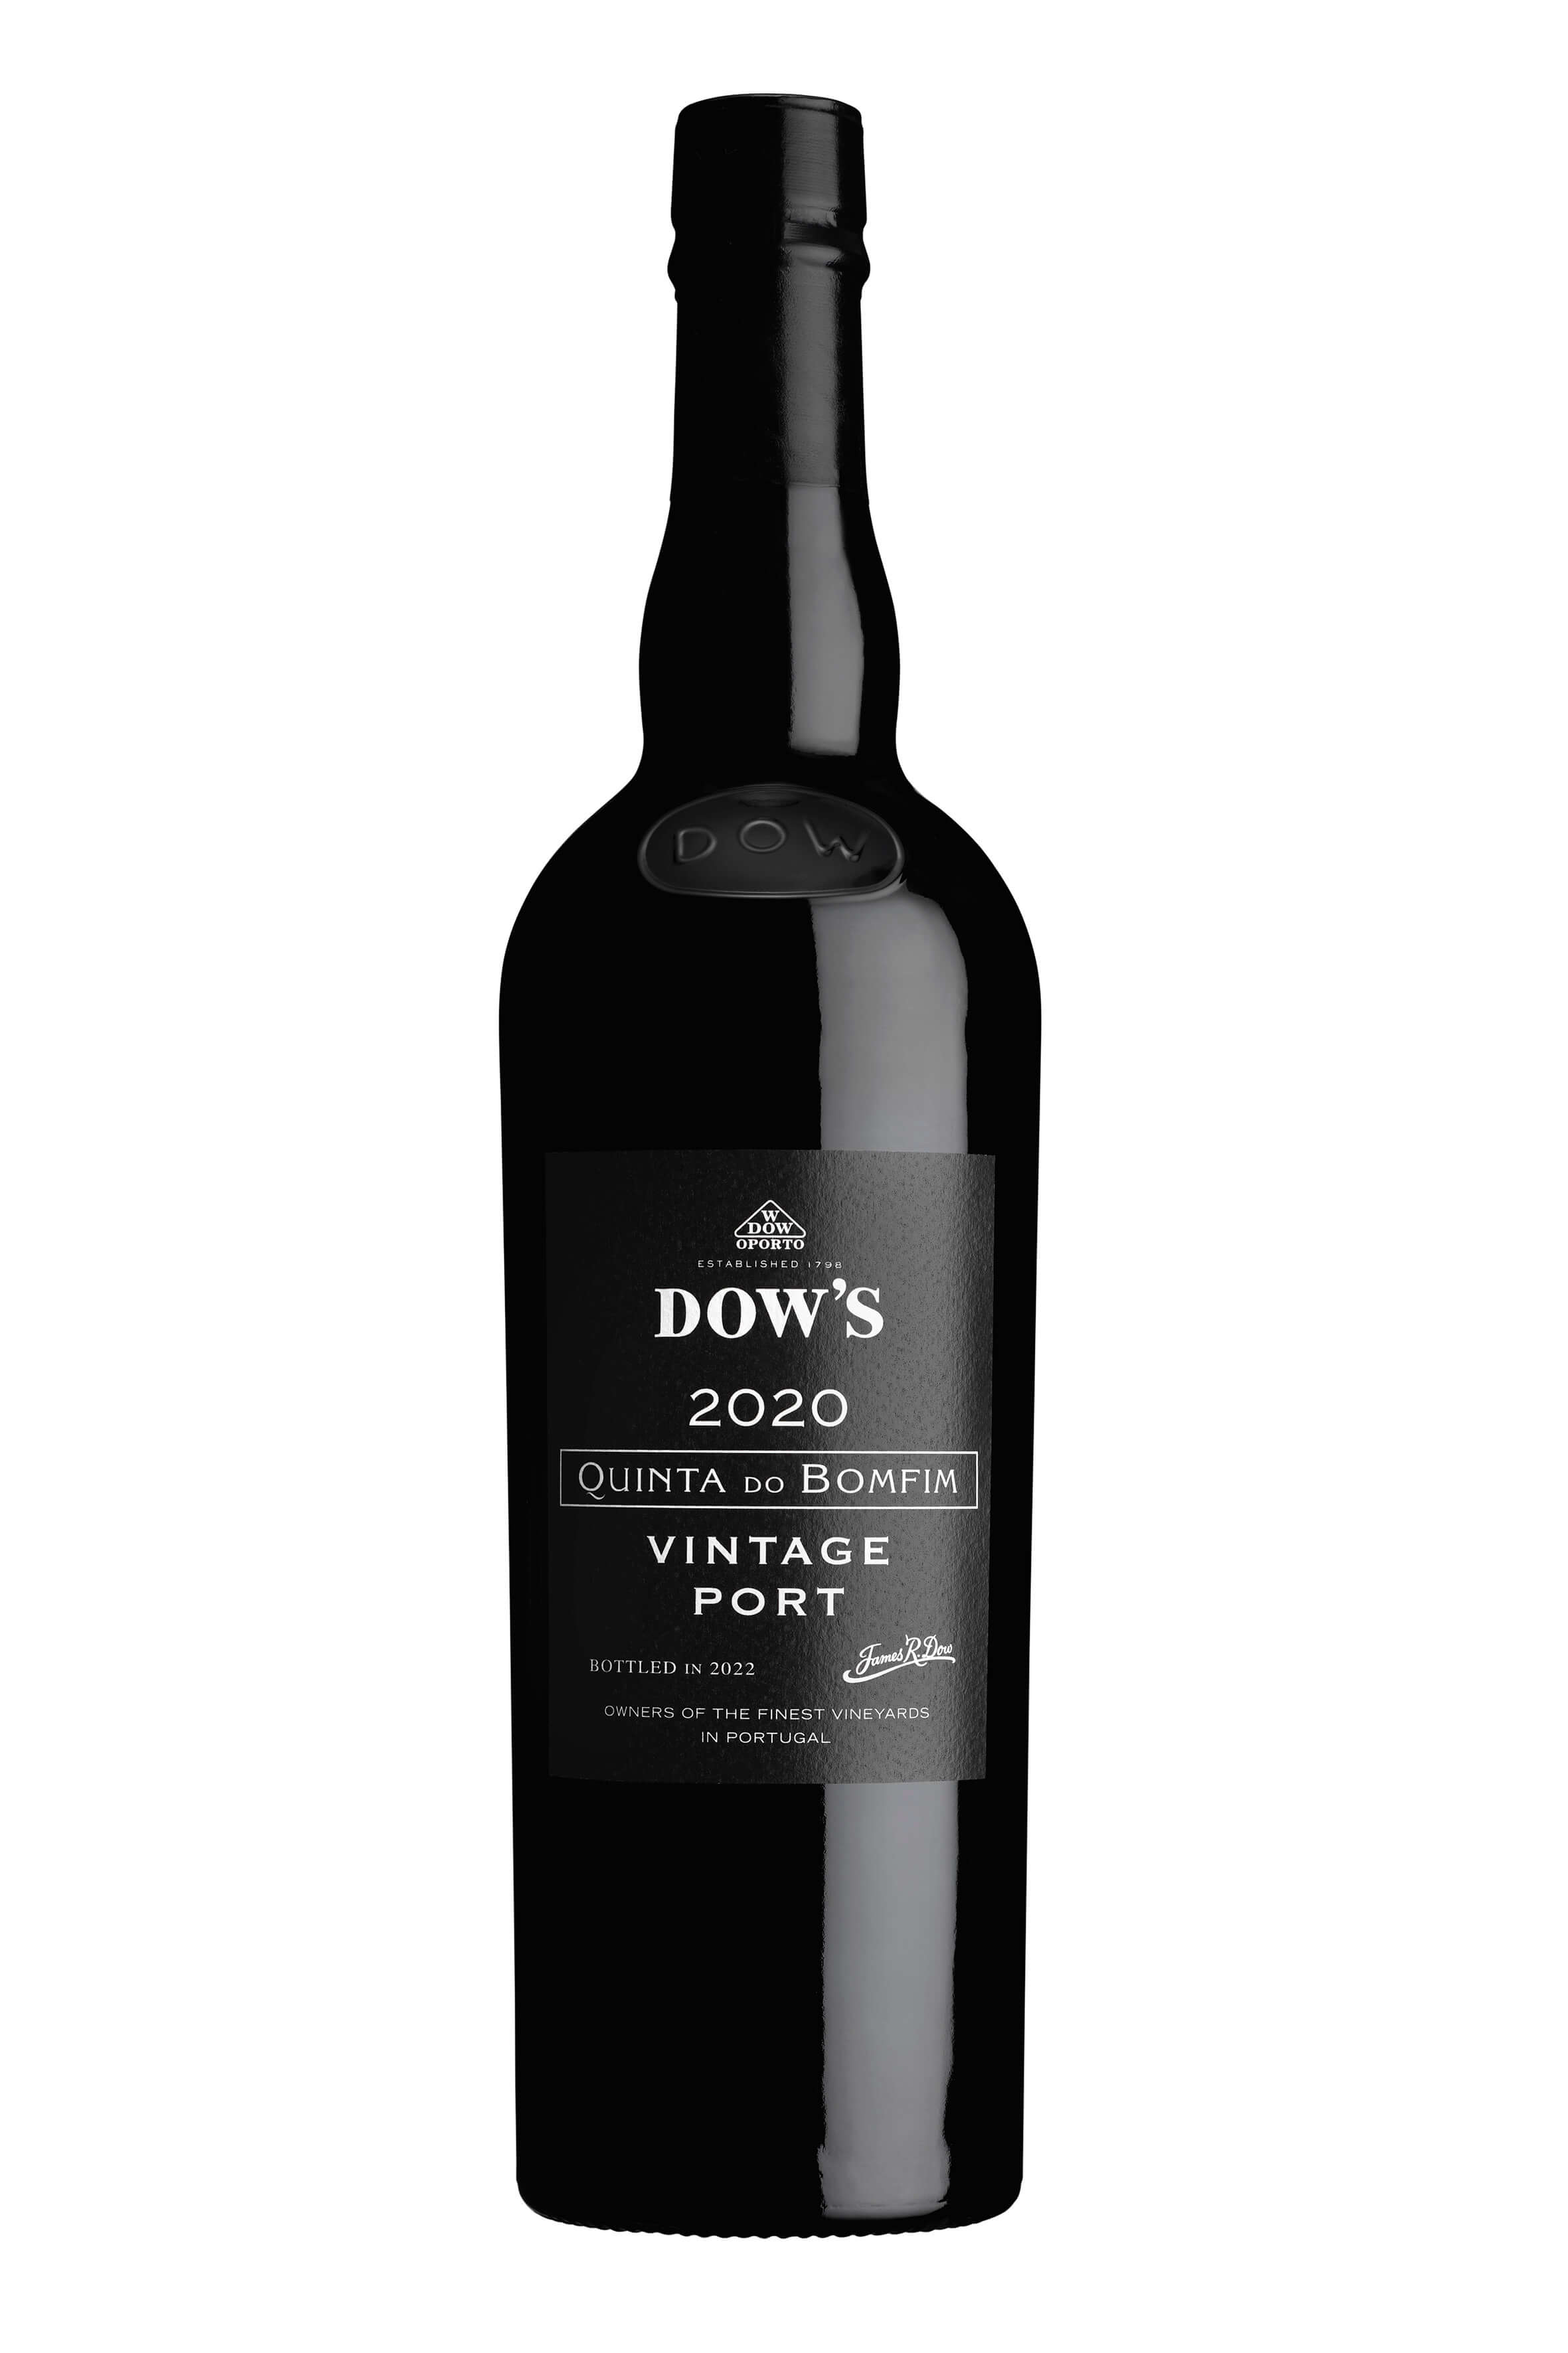 Dow's Quinta do Bomfim label